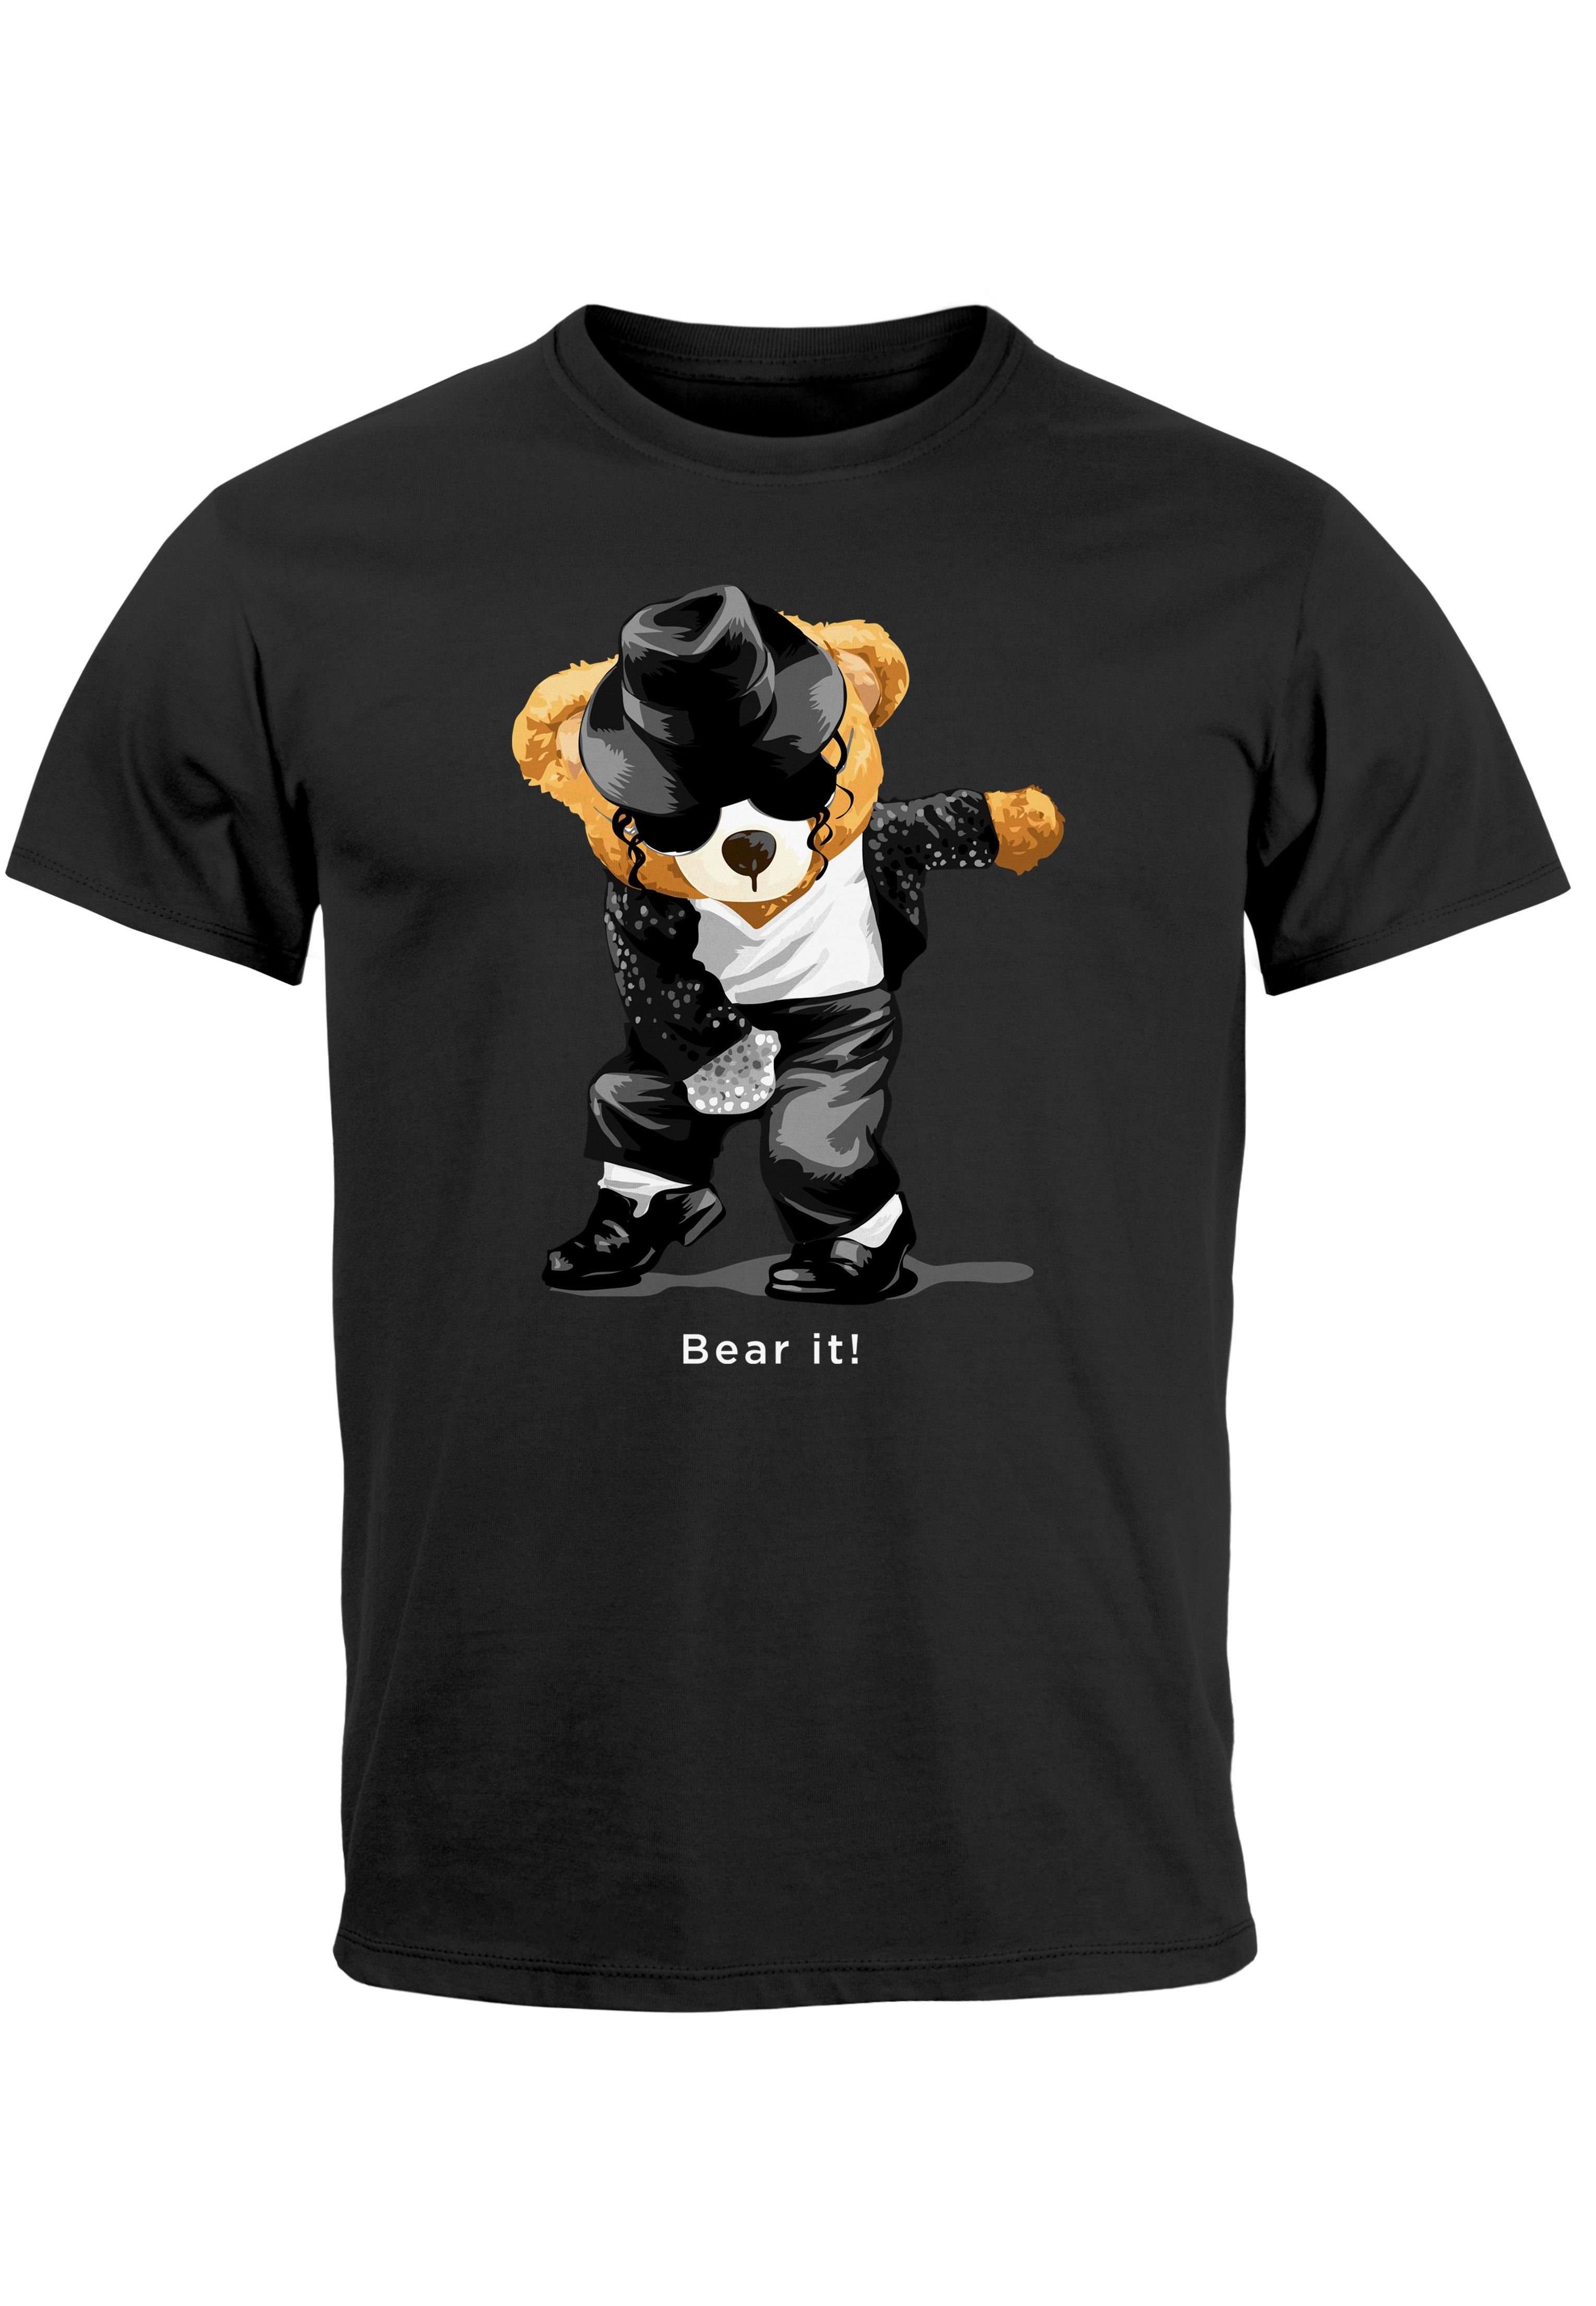 Neverless Print-Shirt Herren T-Shirt Jackson Print Bear Bär it! Teddy schwarz Bear Auf Parodie Print mit Musik